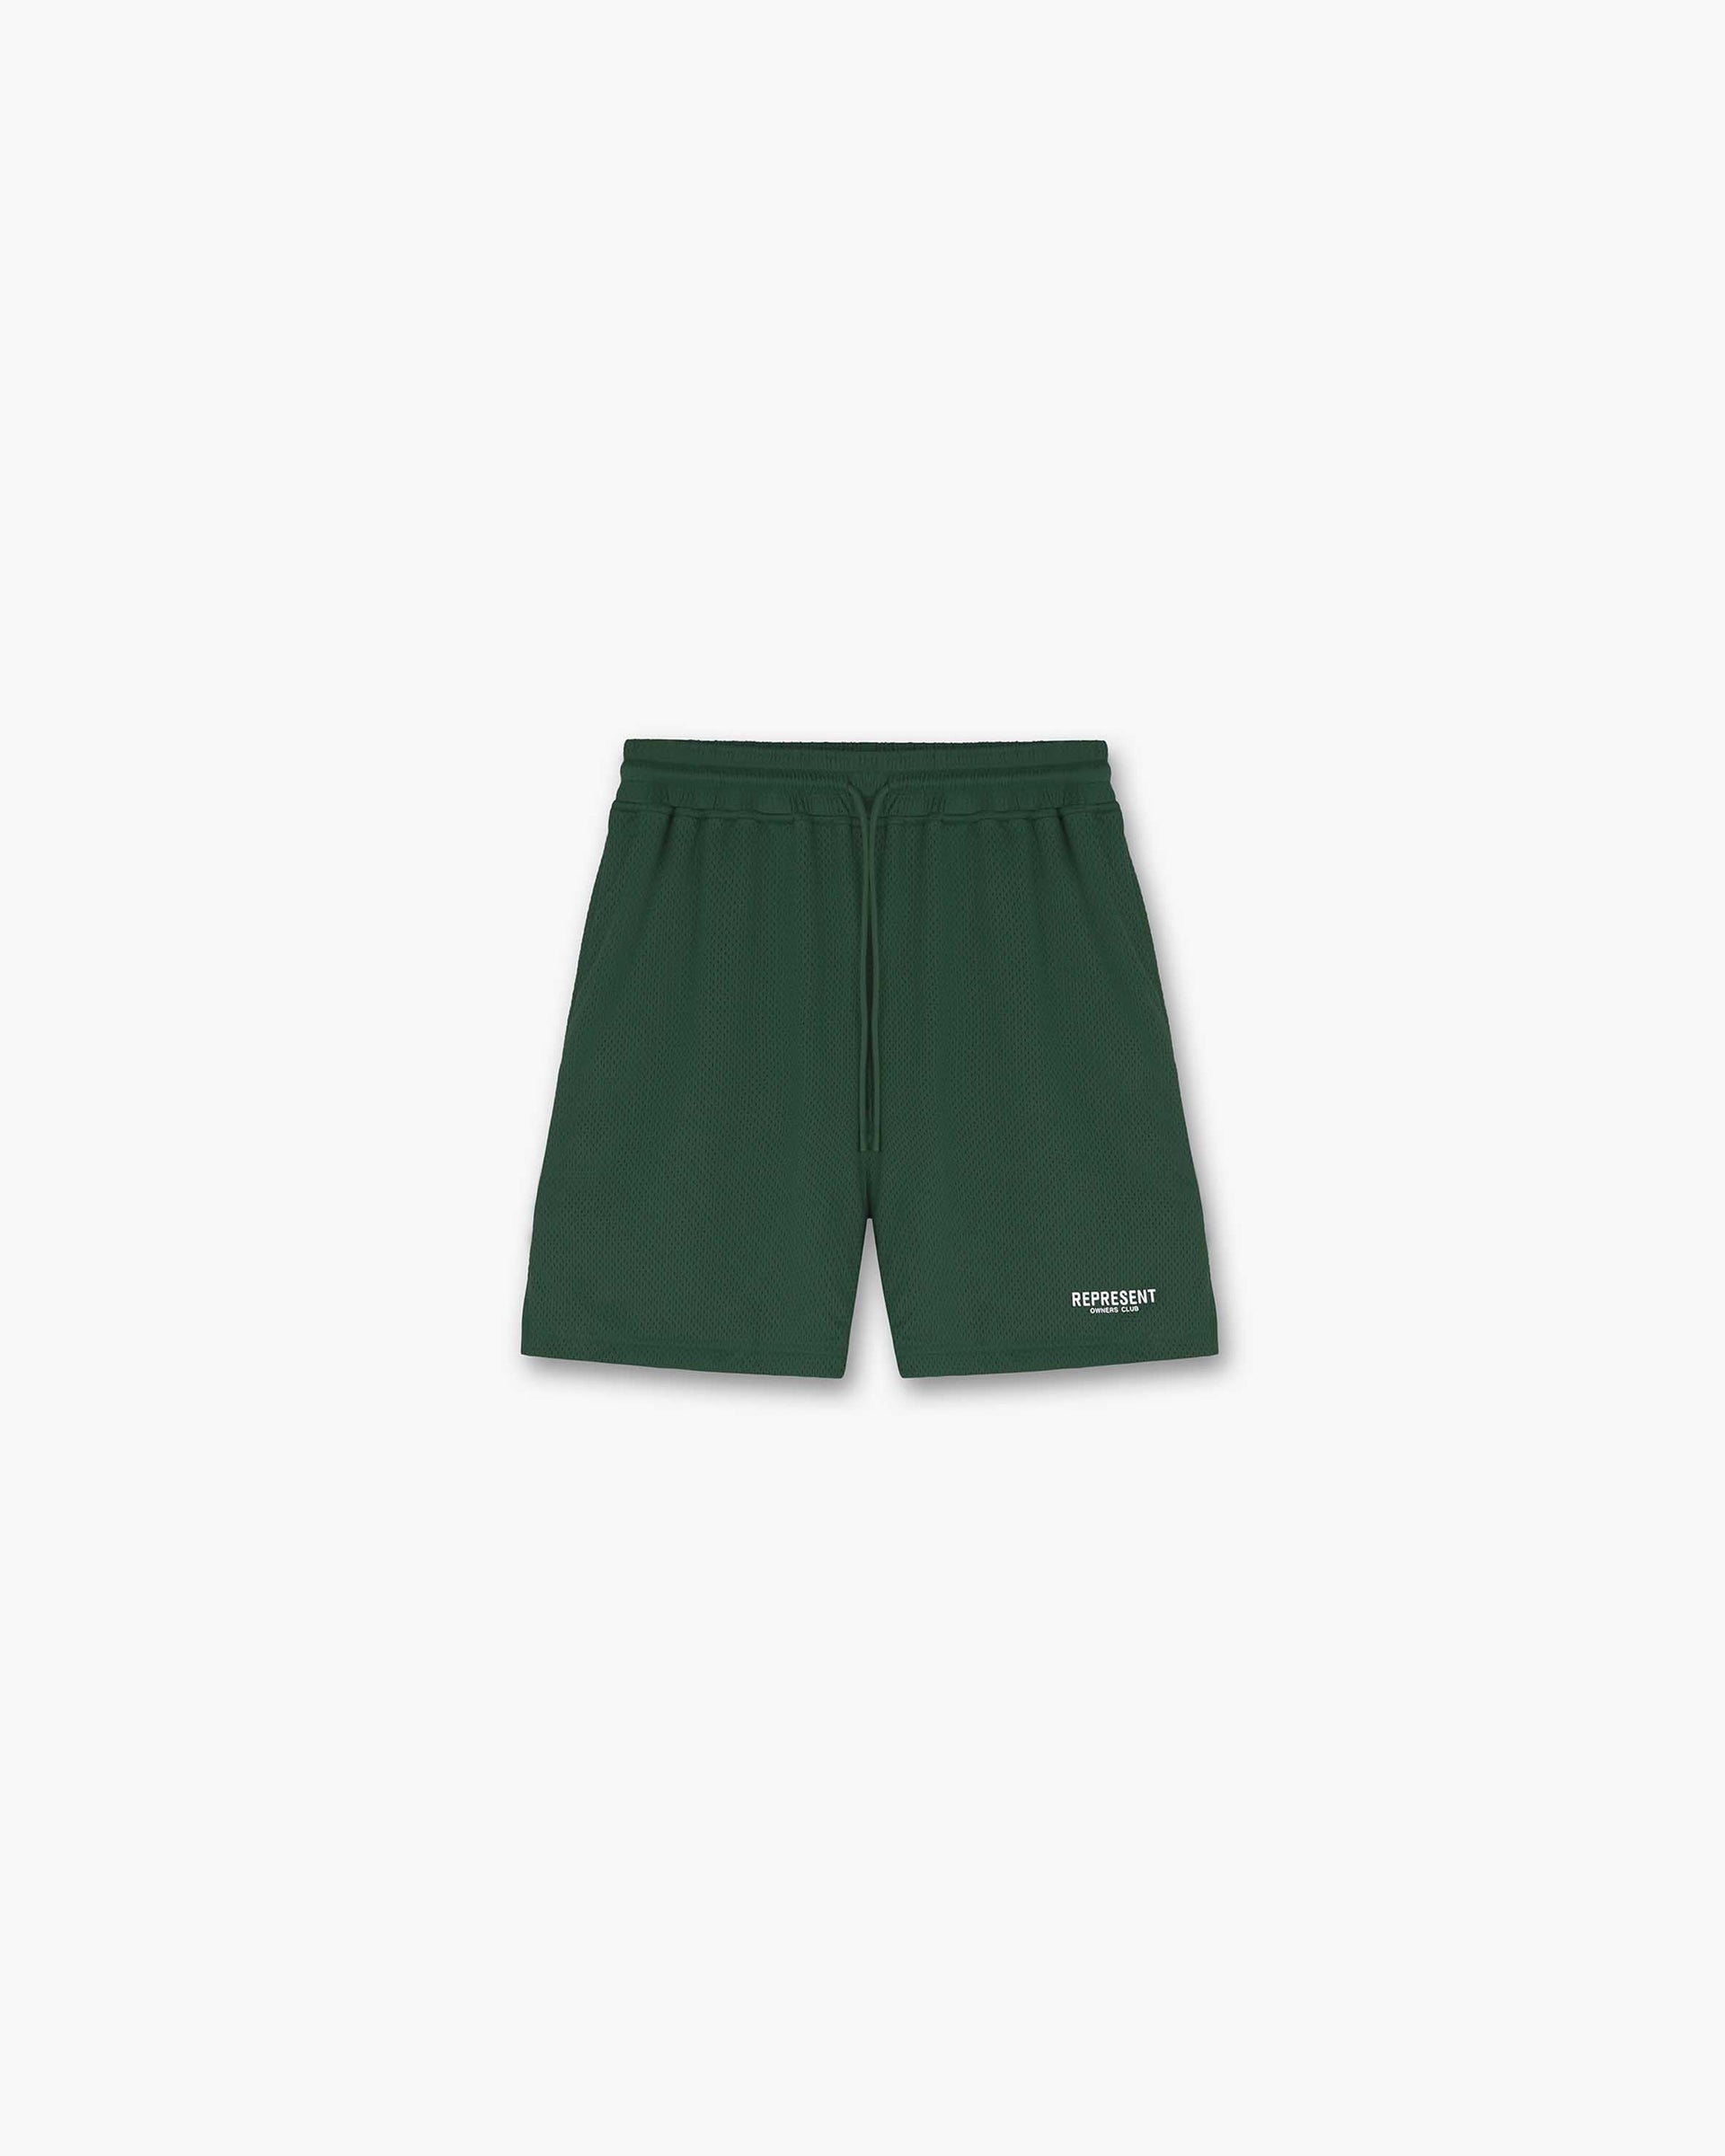 Represent Owners Club Mesh Shorts | Racing Green Shorts Owners Club | Represent Clo